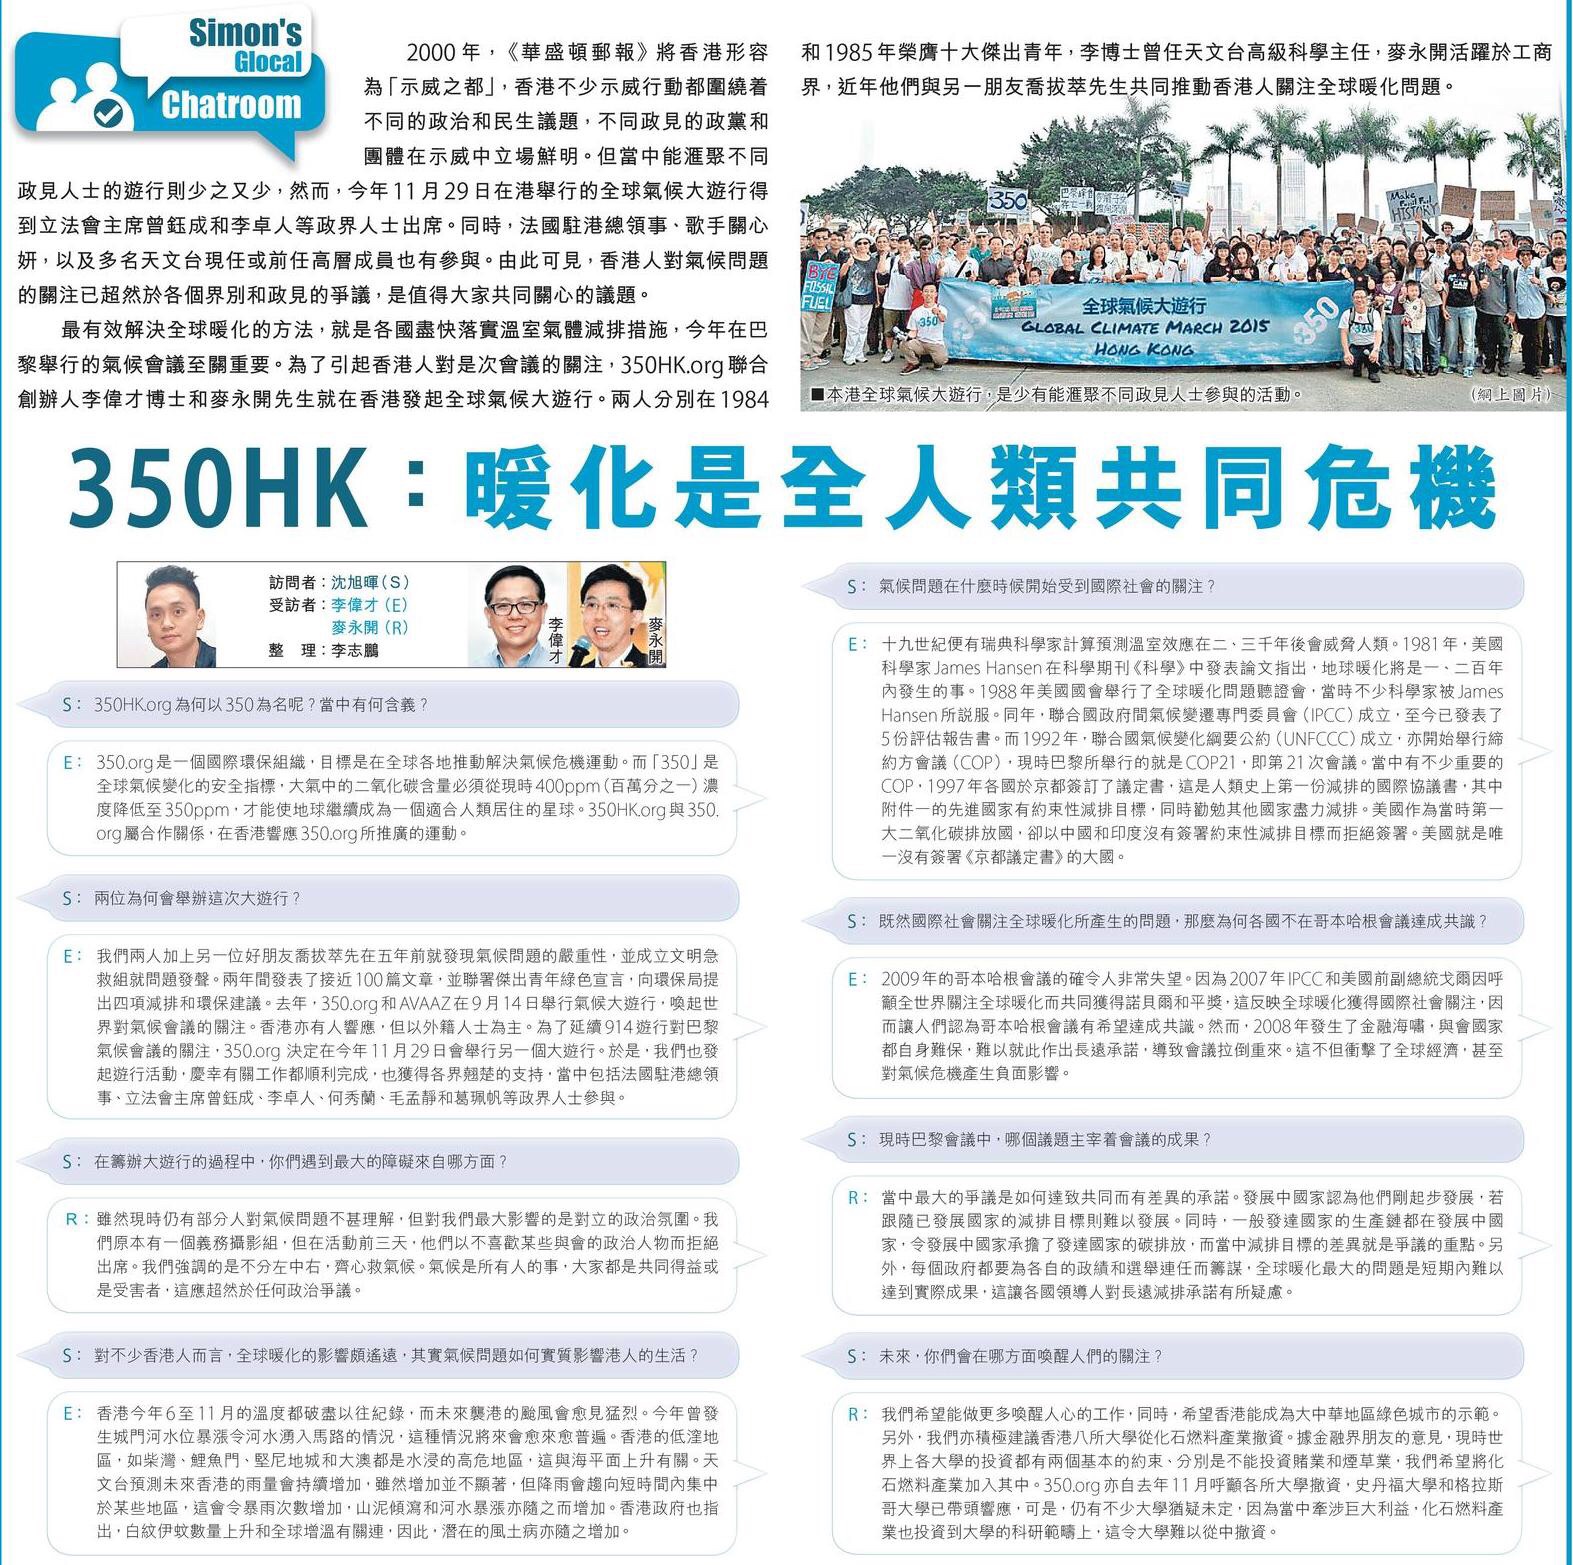 HKEJ article on 350HK